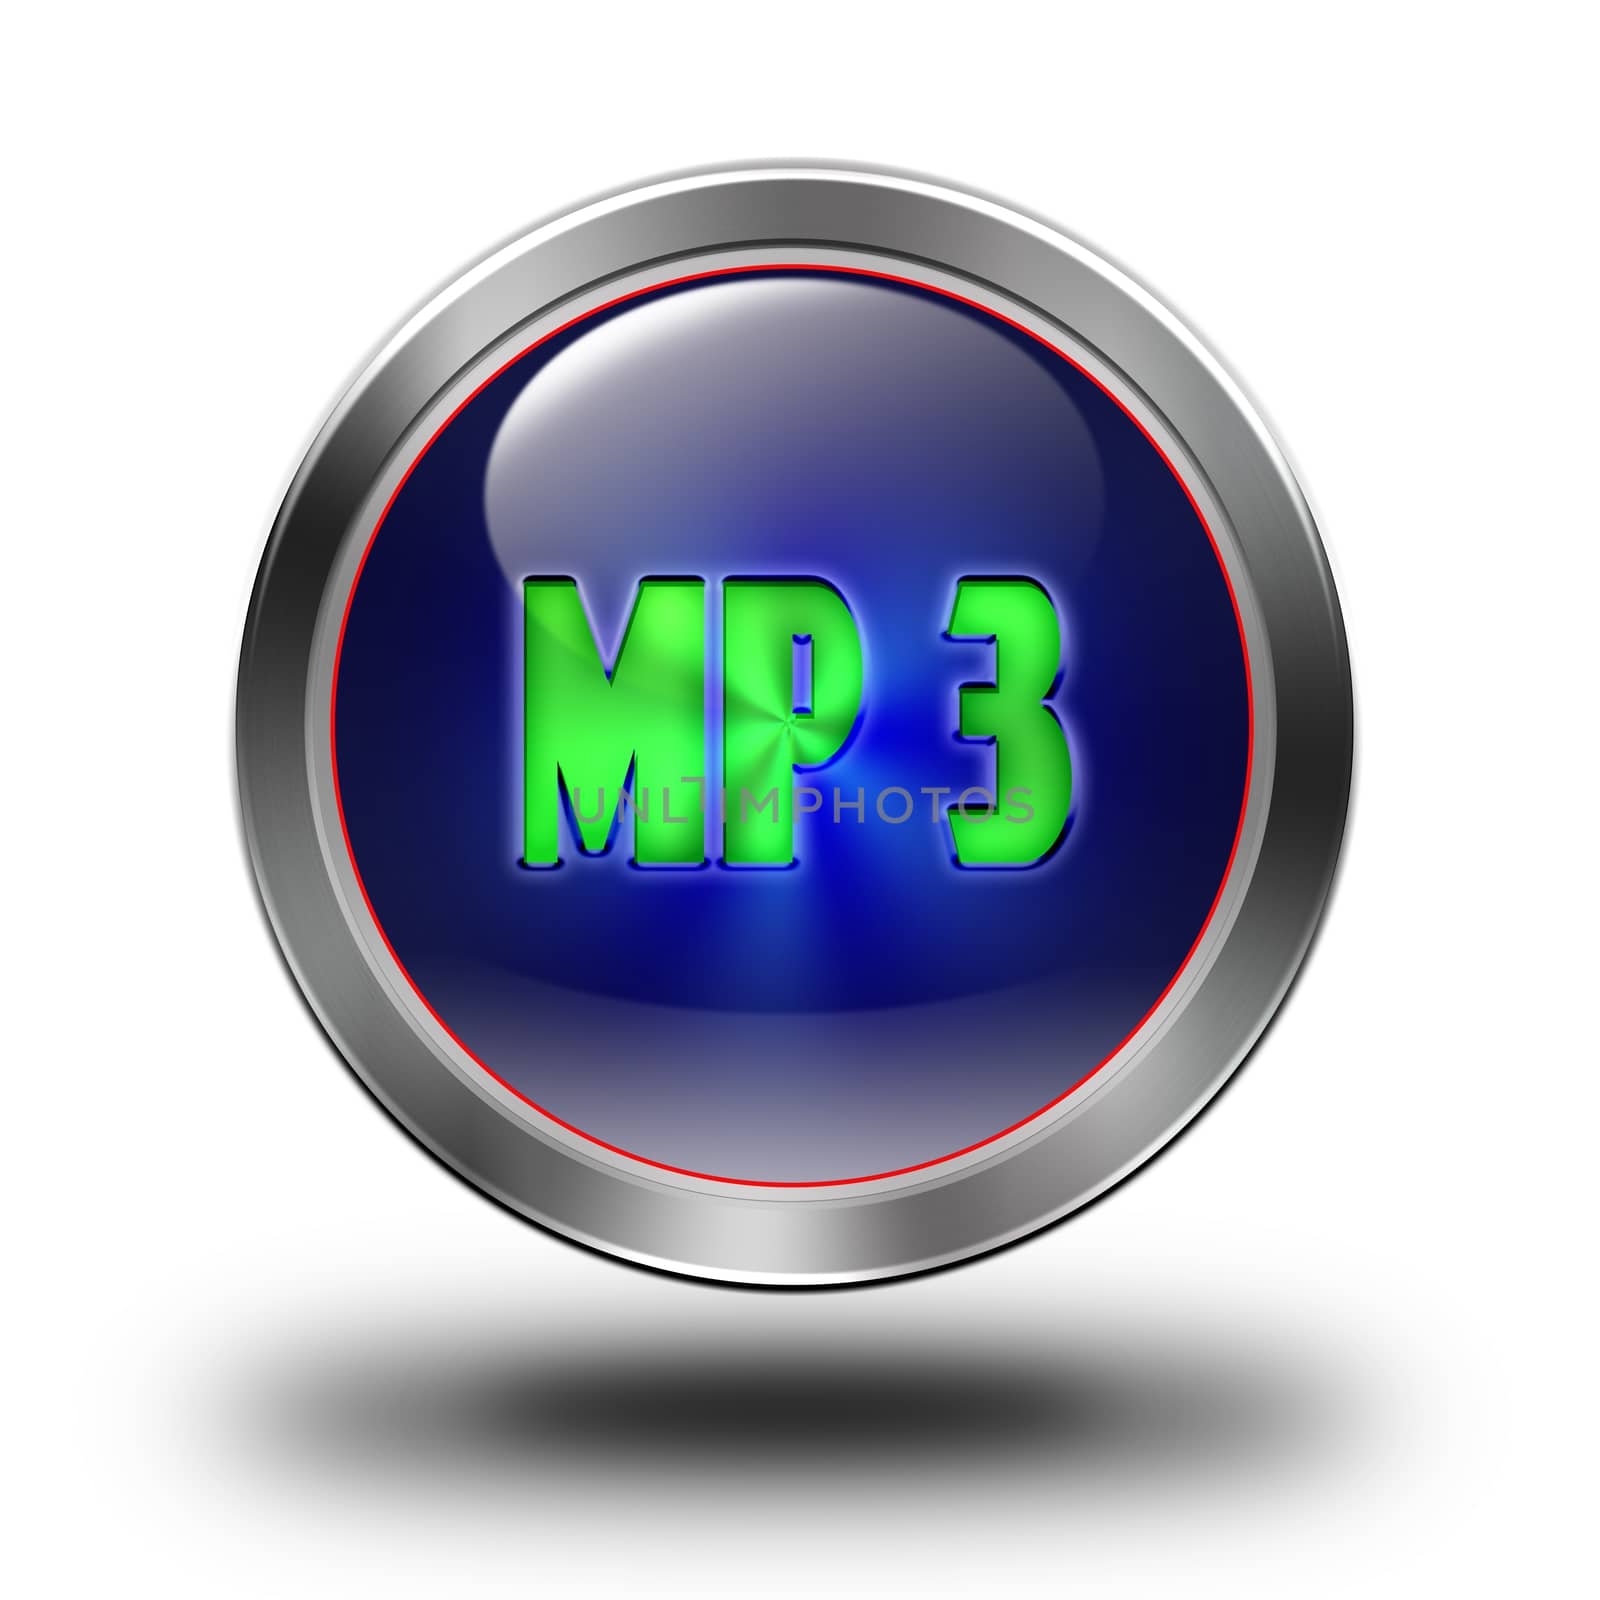 MP3 glossy icon by konradkerker